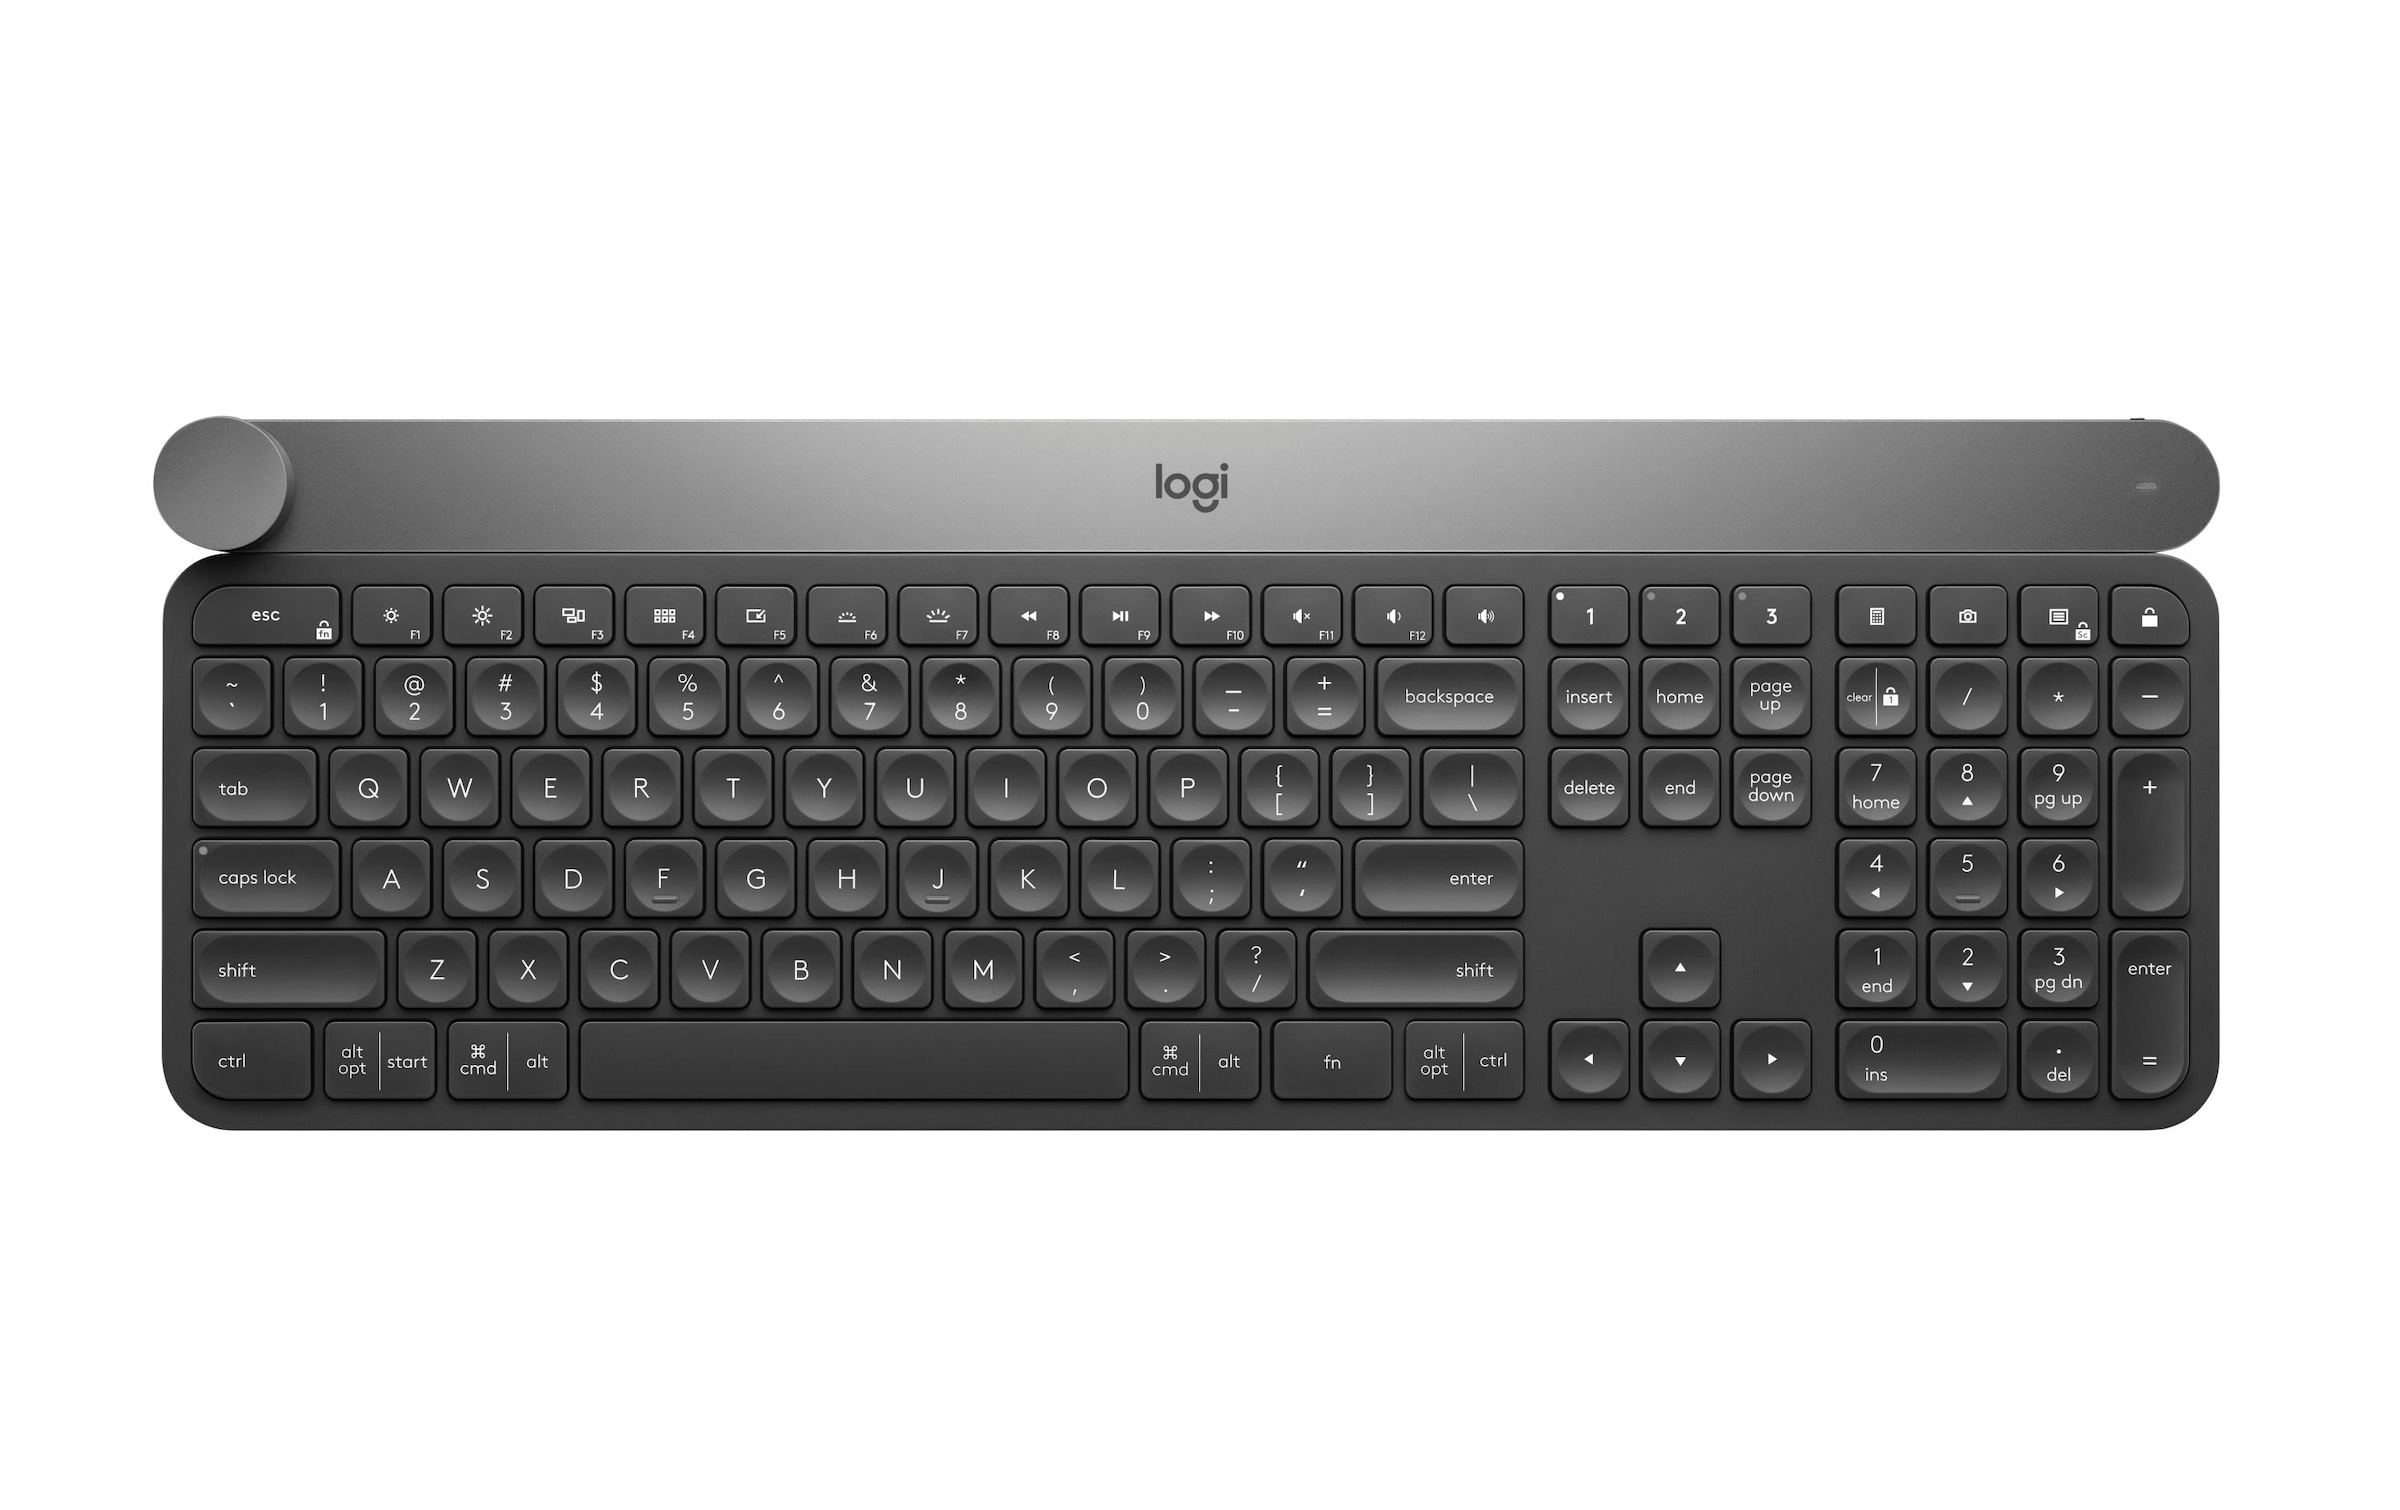 PC-Tastatur »Craft«, (Ziffernblock)